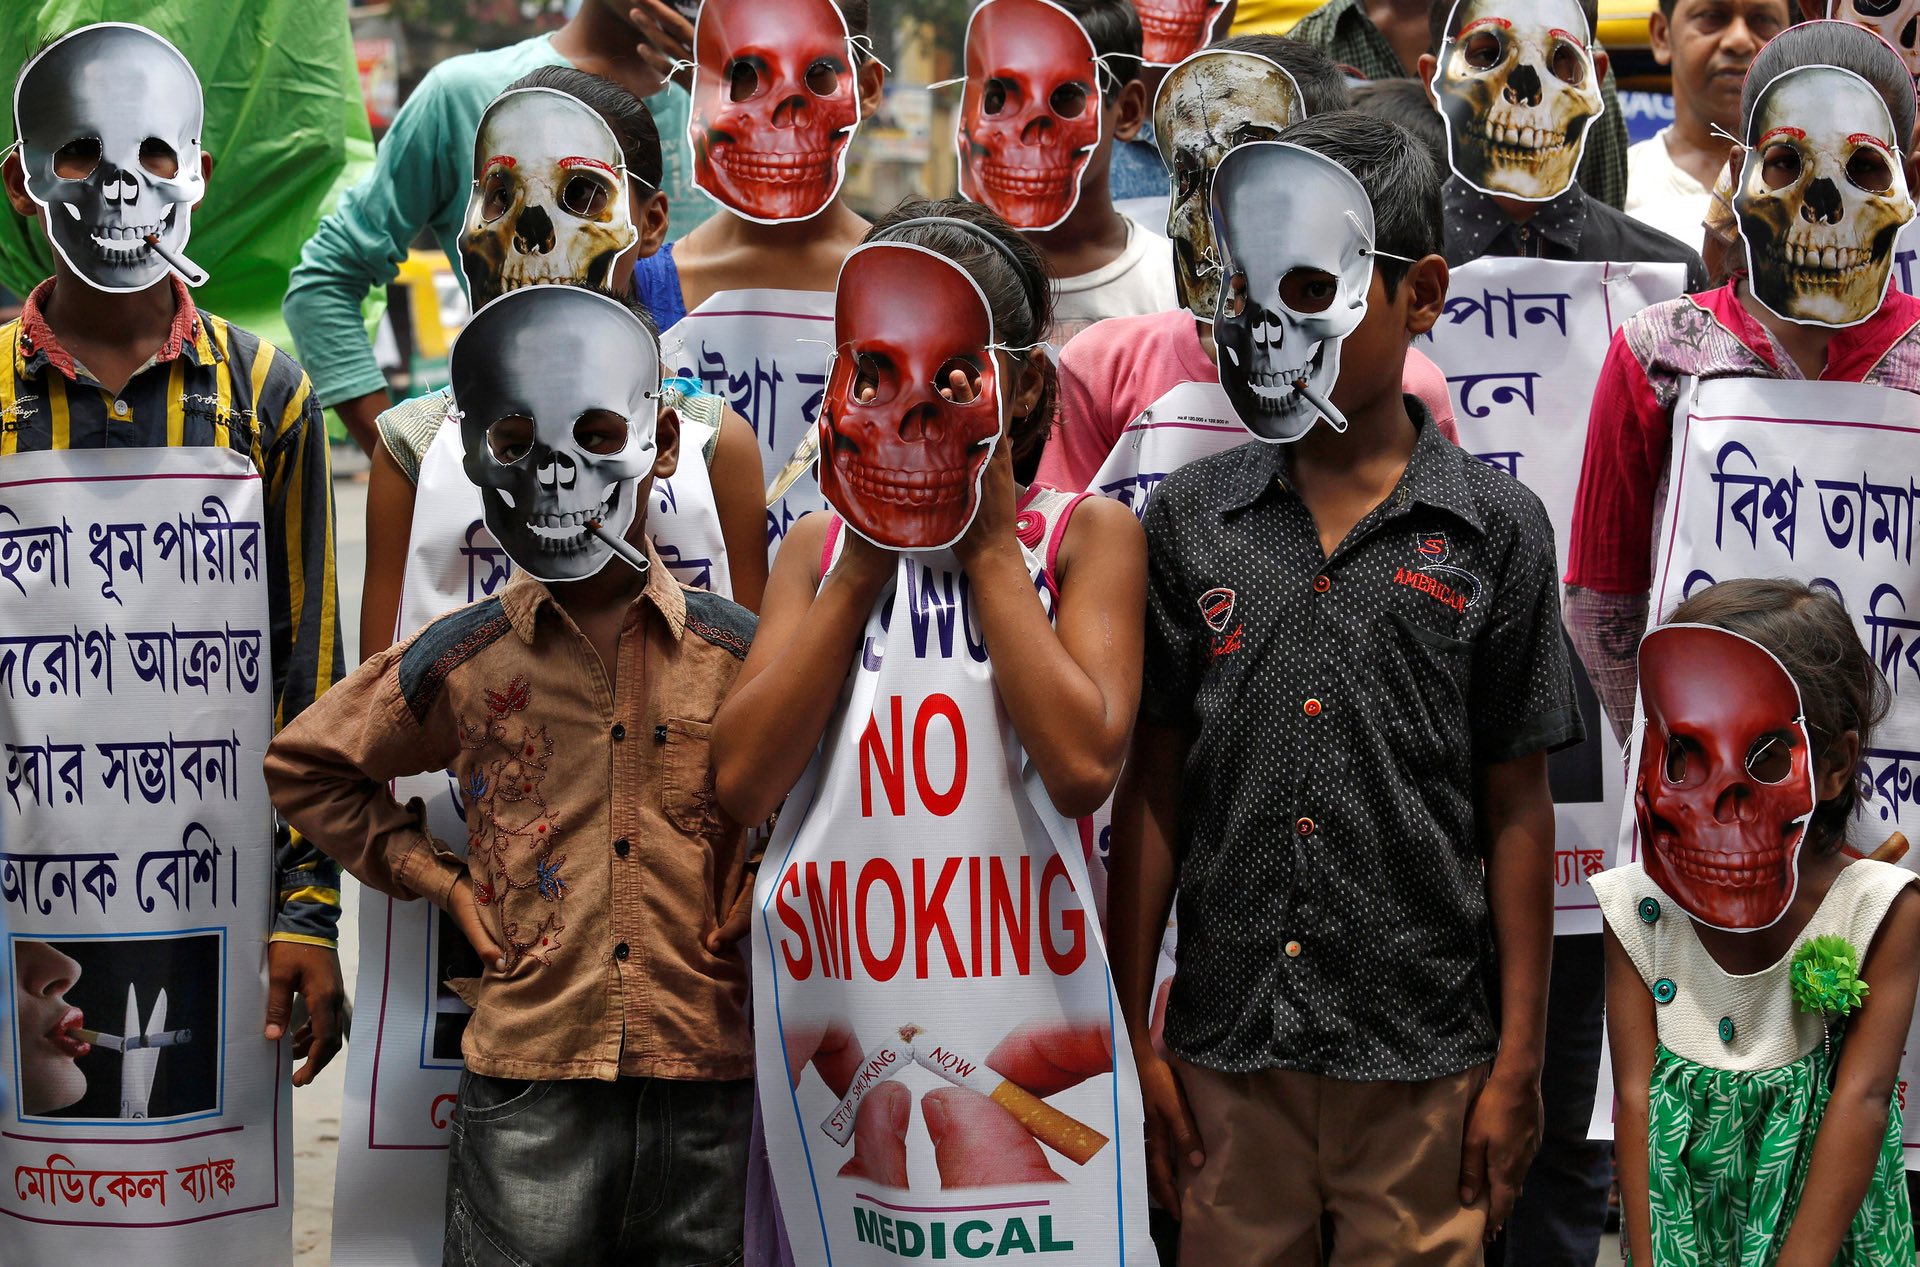 Children wearing masks at an event to mark World No Tobacco Day, Kolkata, India. PHOTO: REUTERS